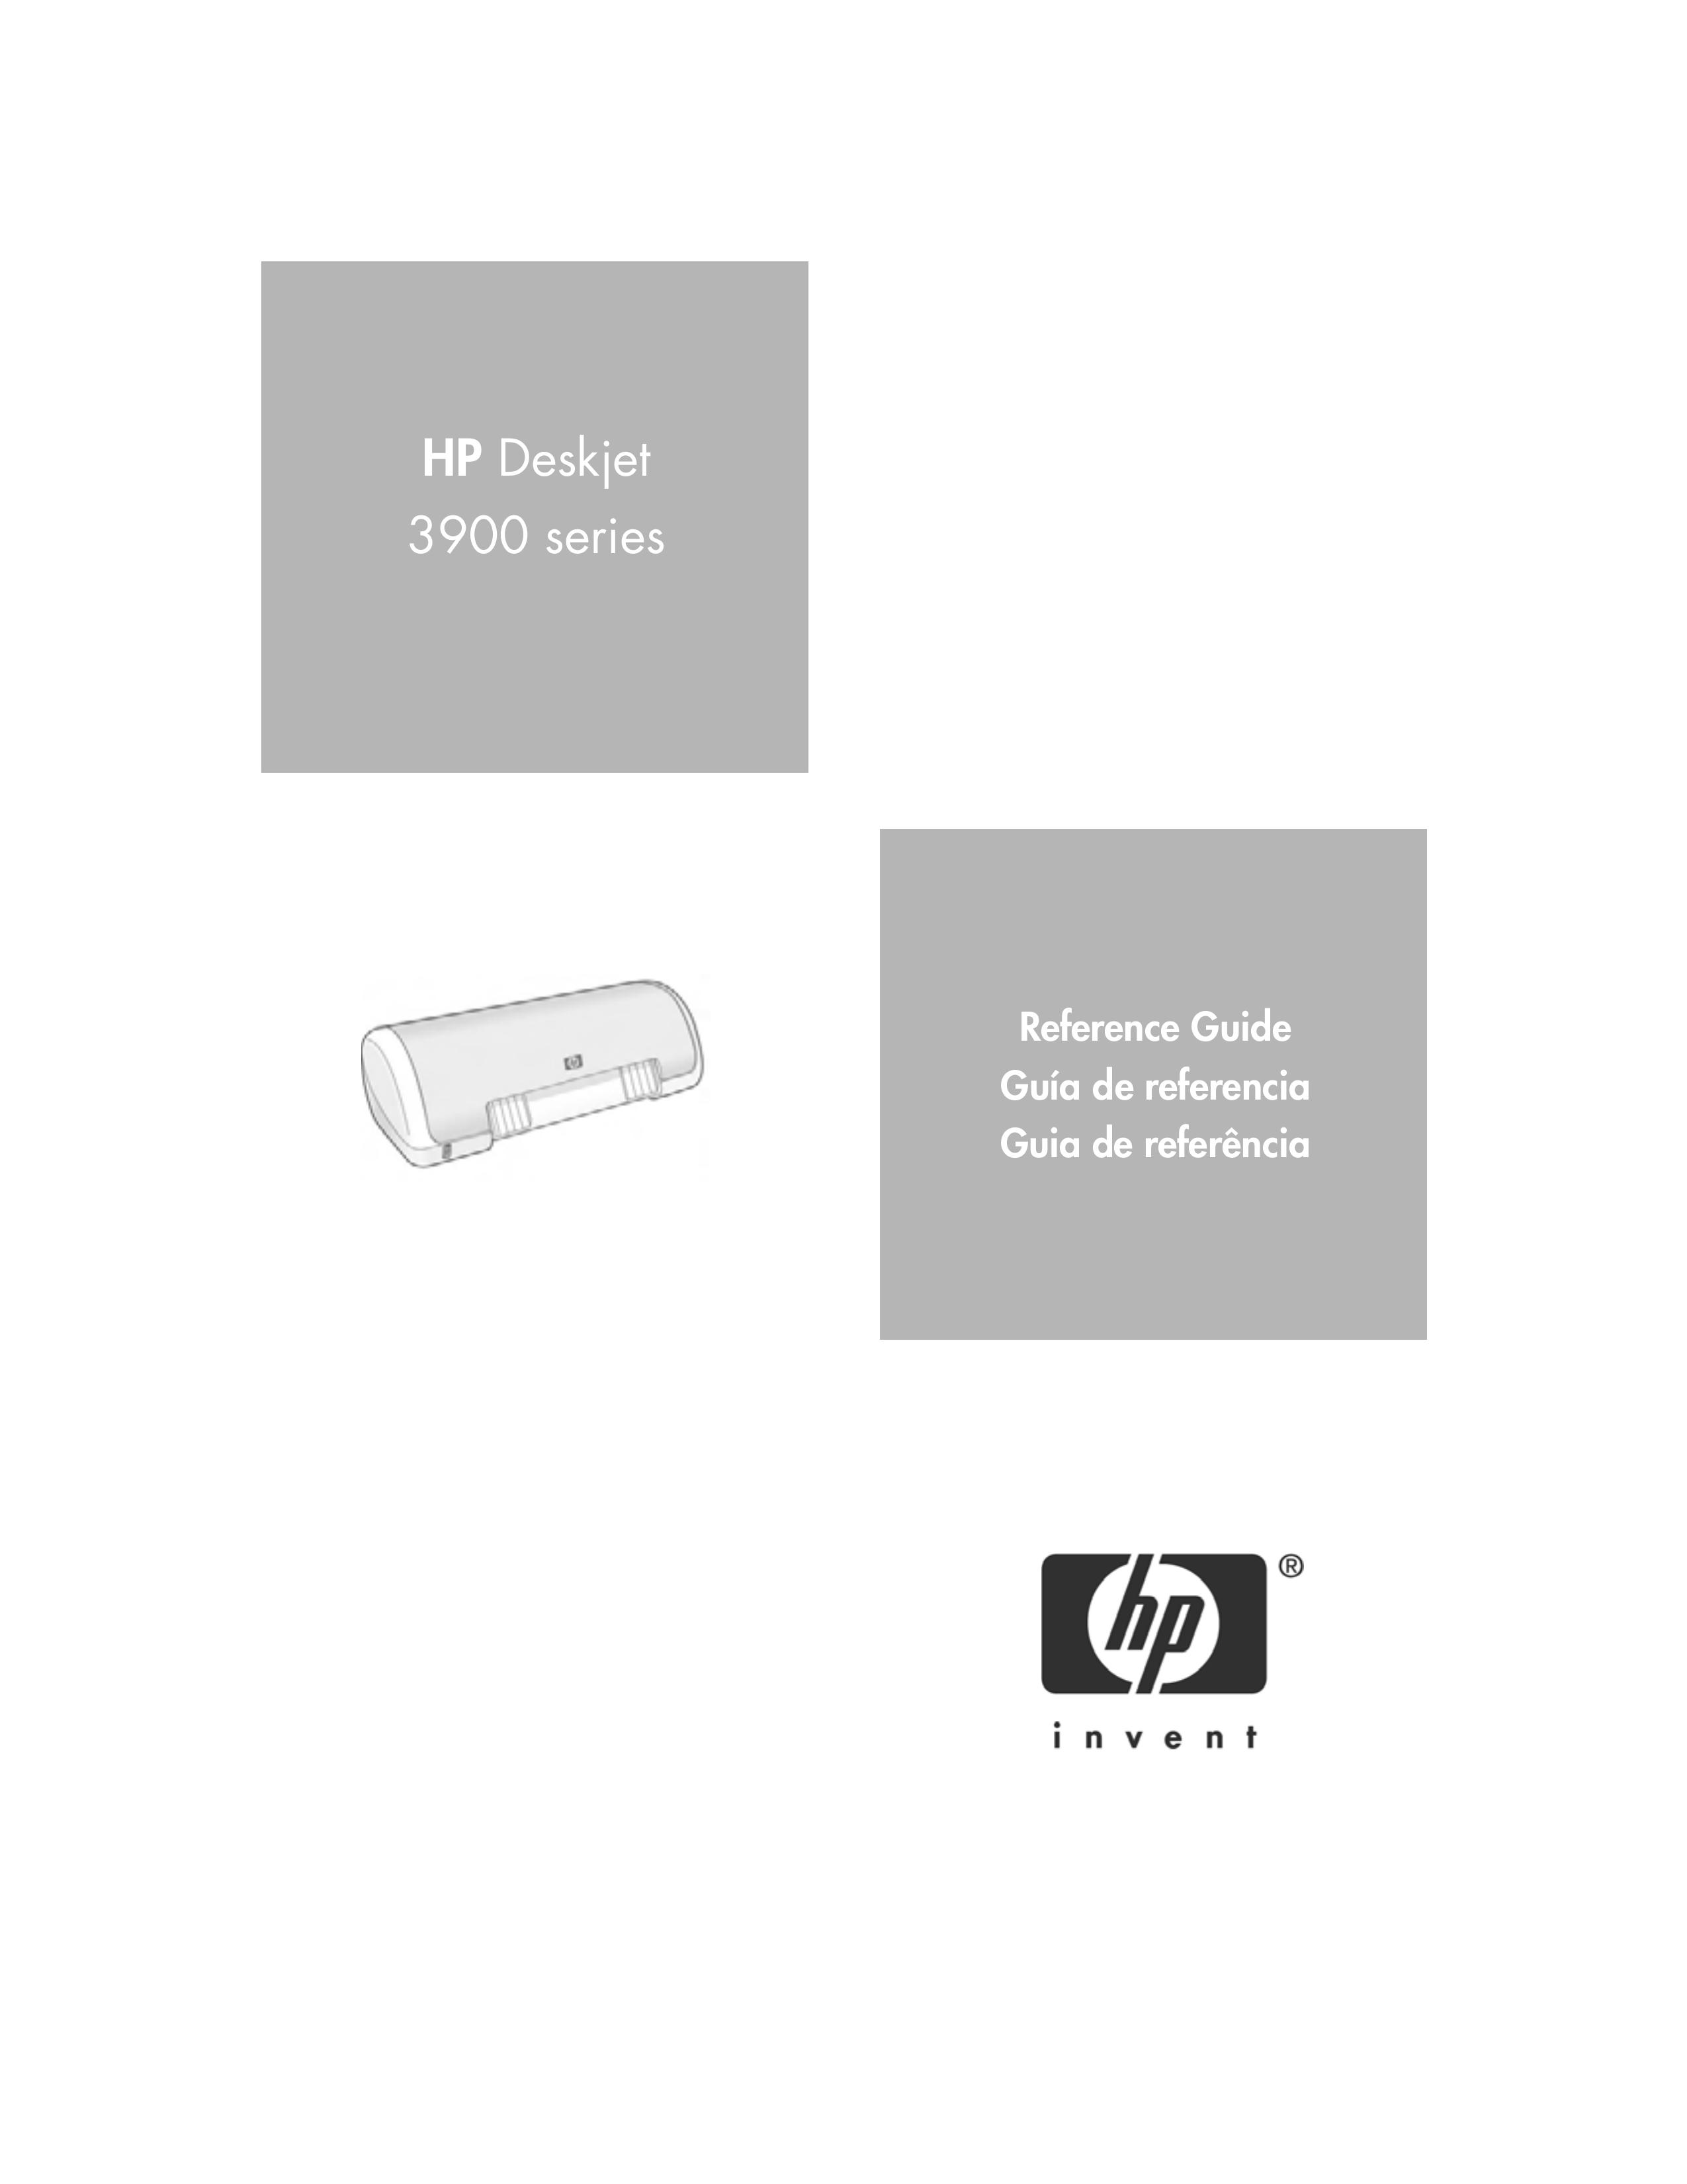 HP (Hewlett-Packard) 3900 series Photo Printer User Manual